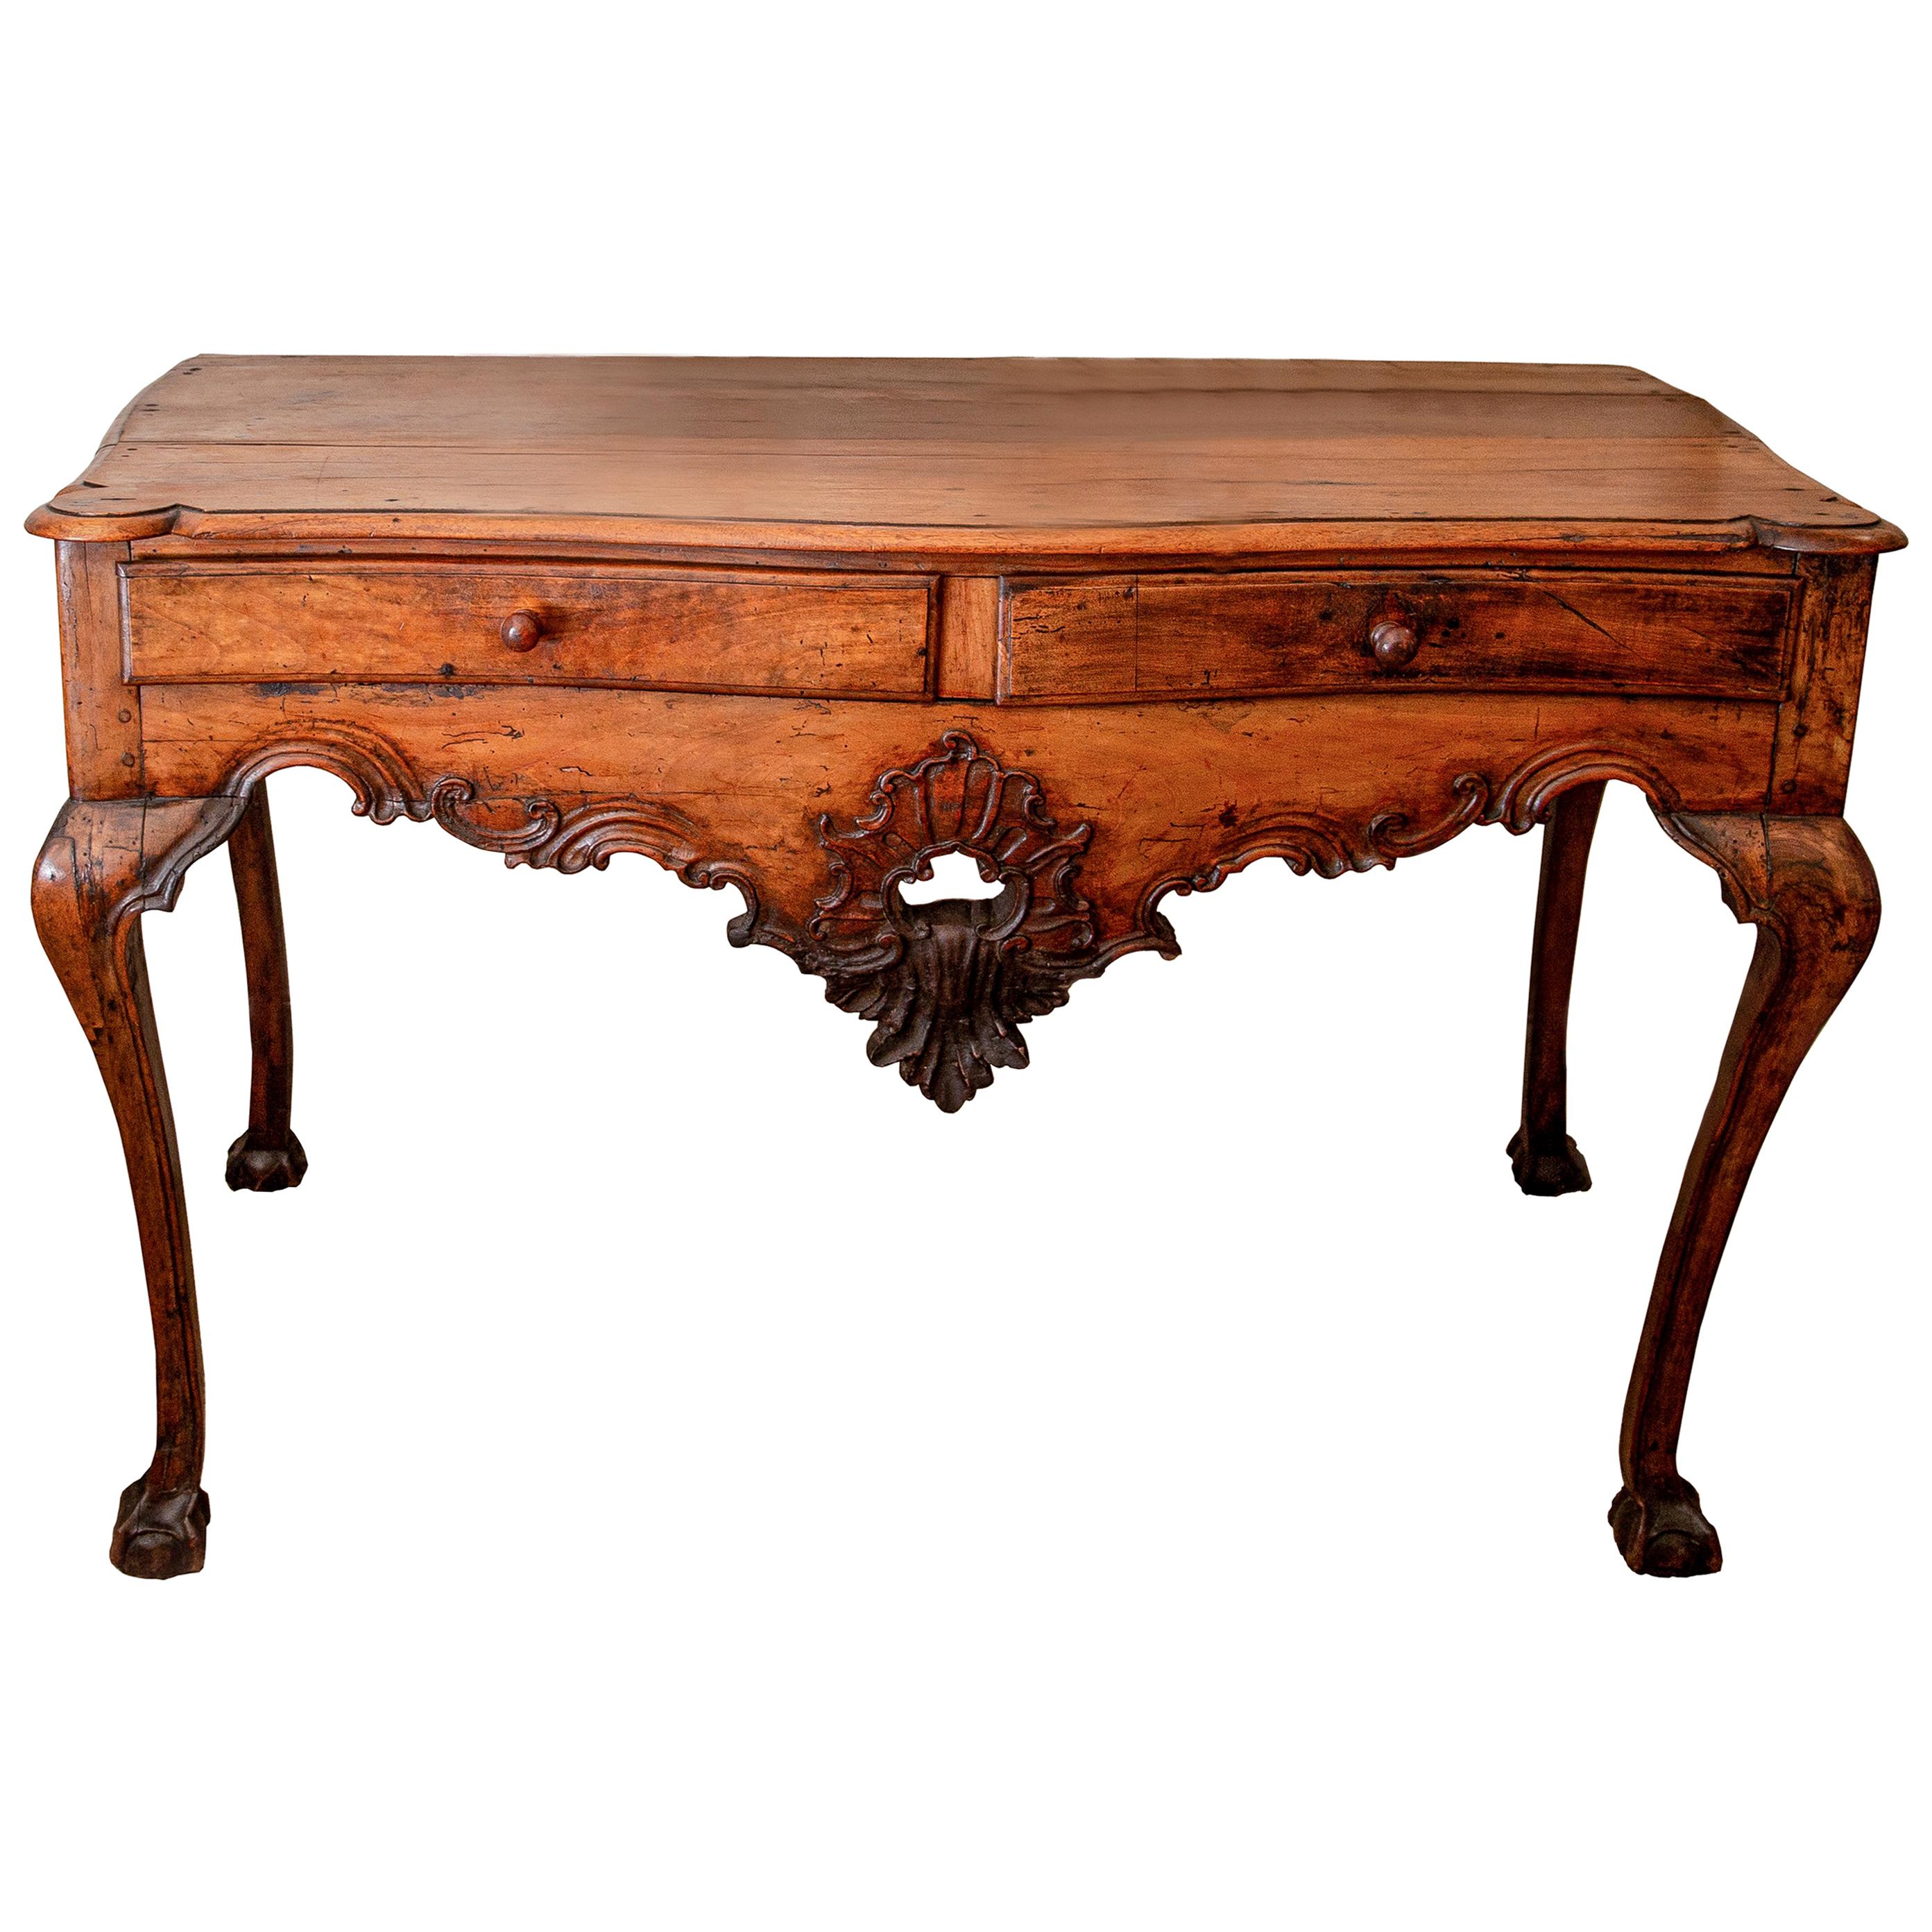 João V King of Portugal, Walnut and Cherrywood Side Table / Desk, 18th Century